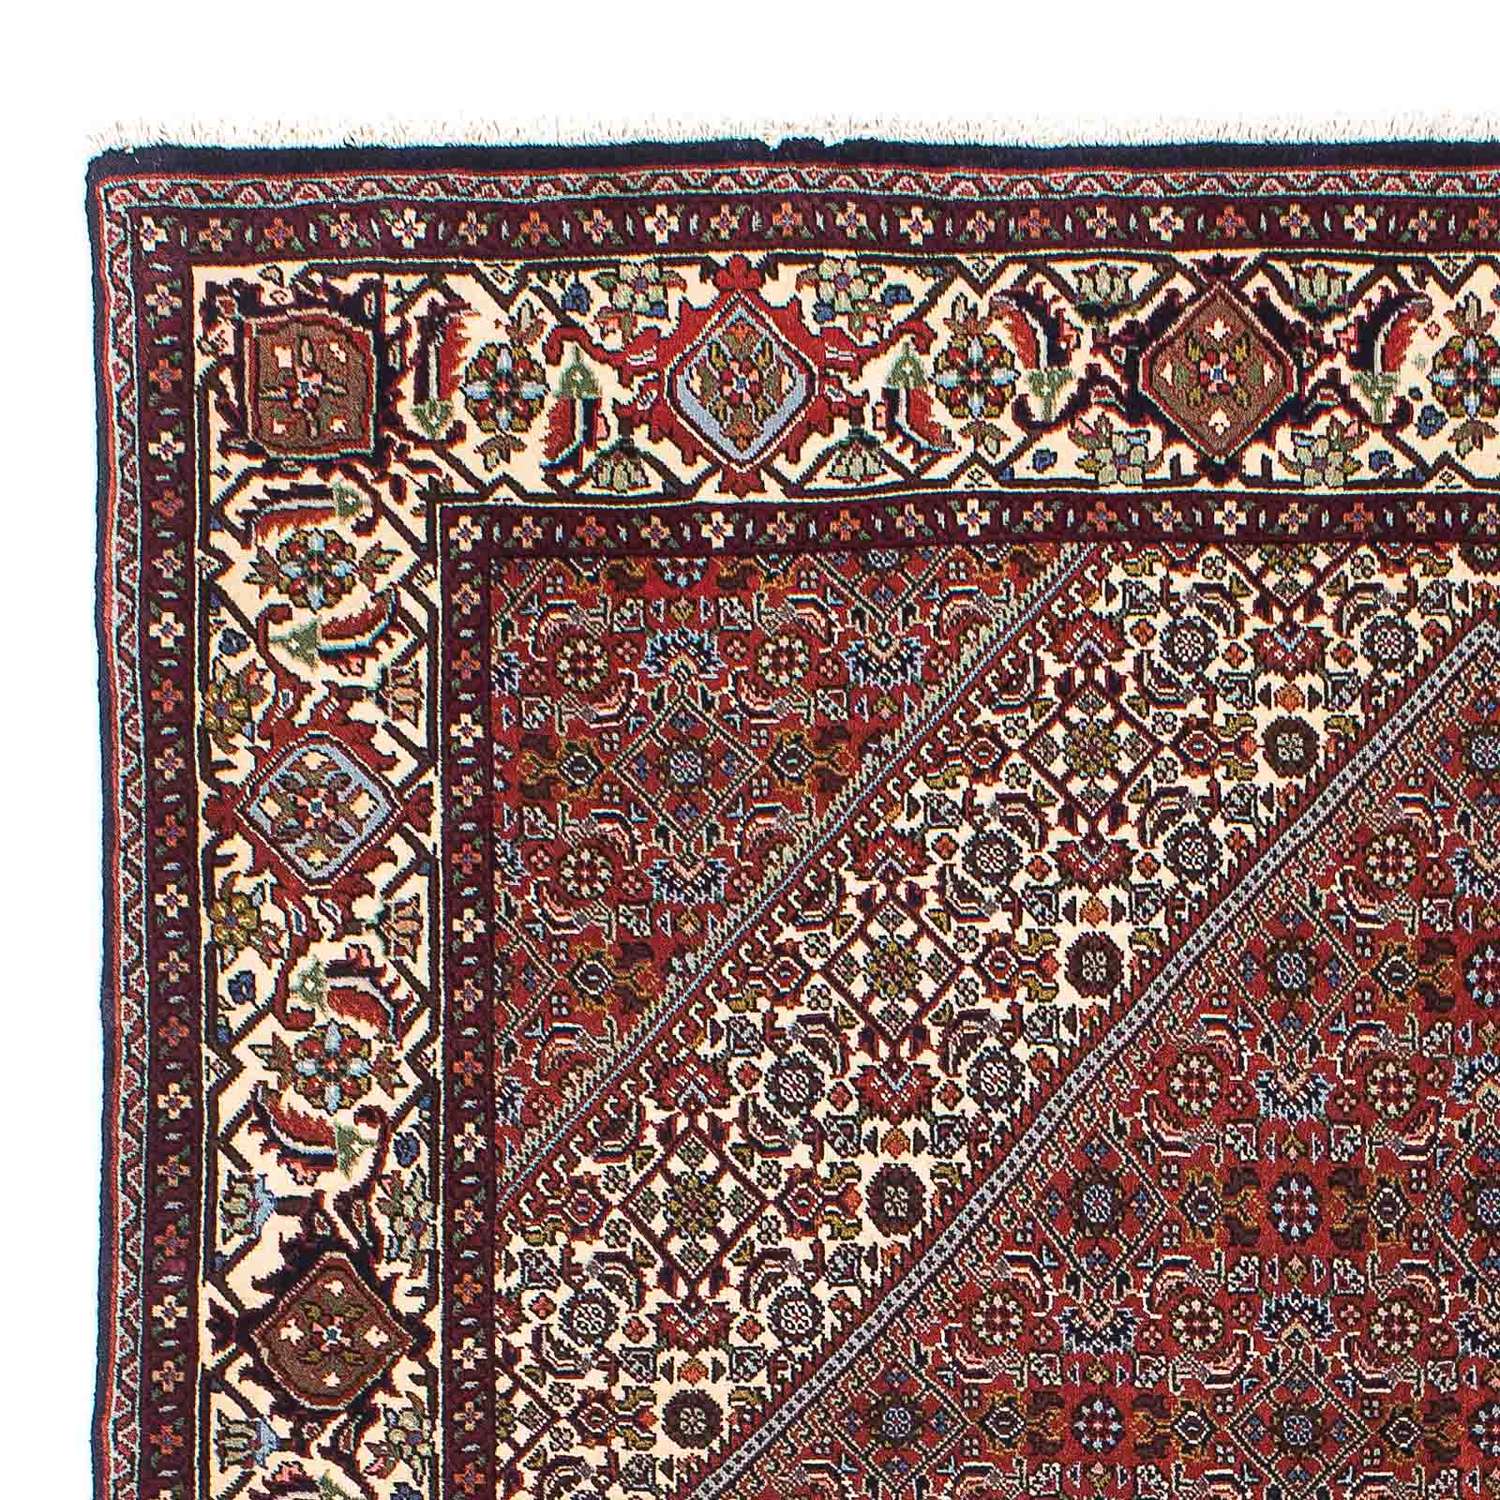 Persisk teppe - Bijar - 188 x 140 cm - rust